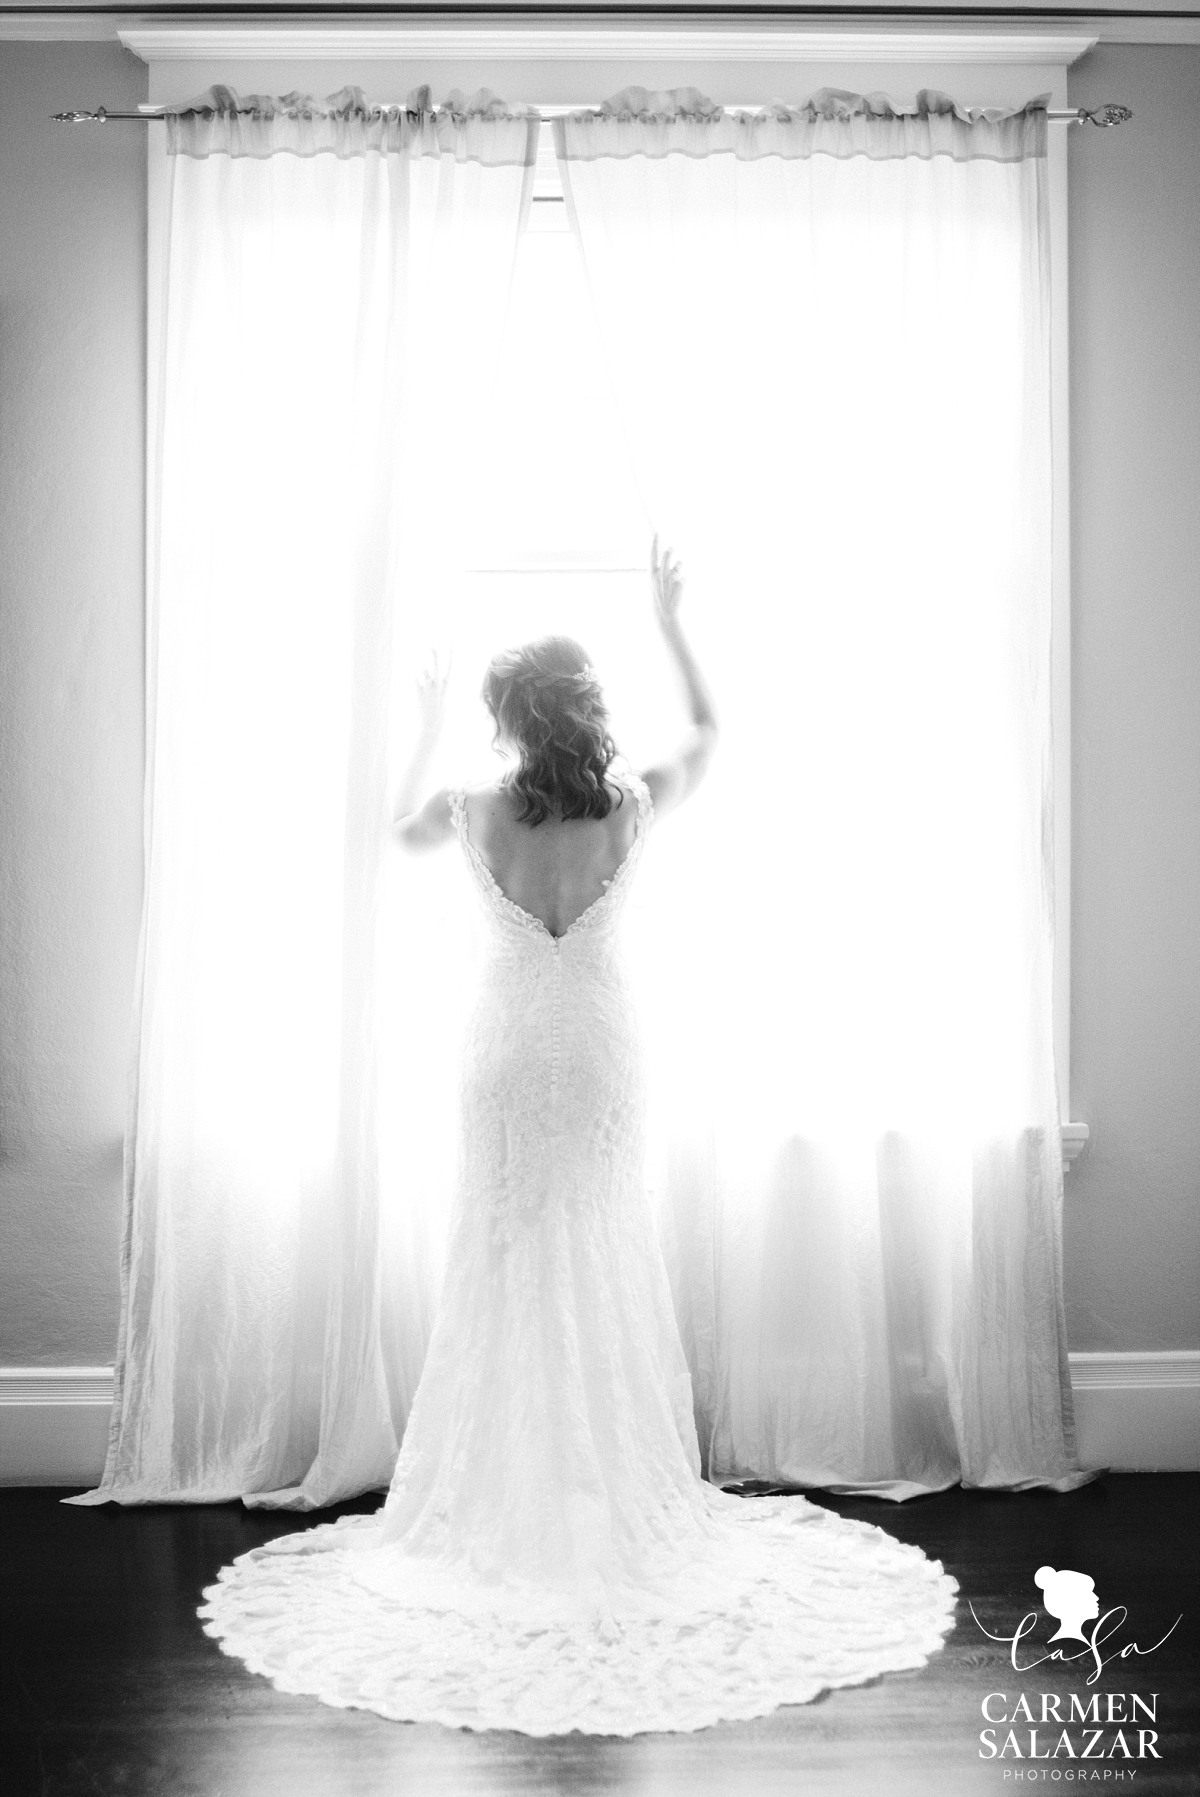 Stunning wedding gown photography - Carmen Salazar